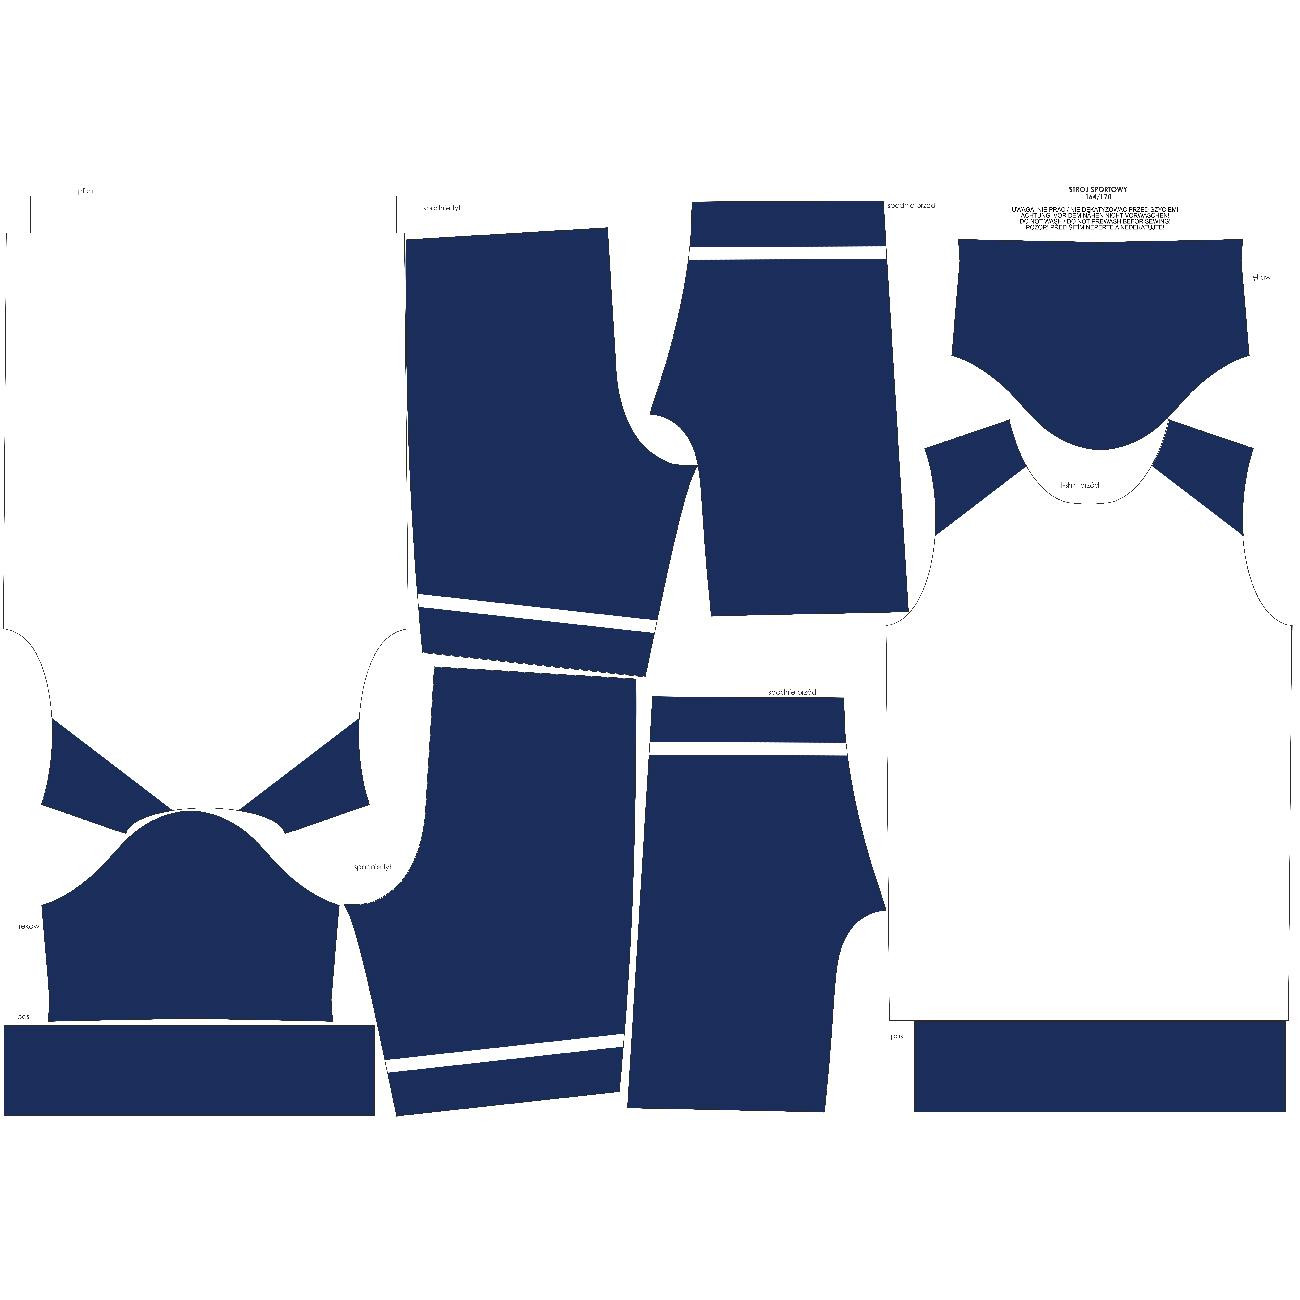 Children's sport outfit "PELE" - WHITE-DARK BLUE - sewing set 